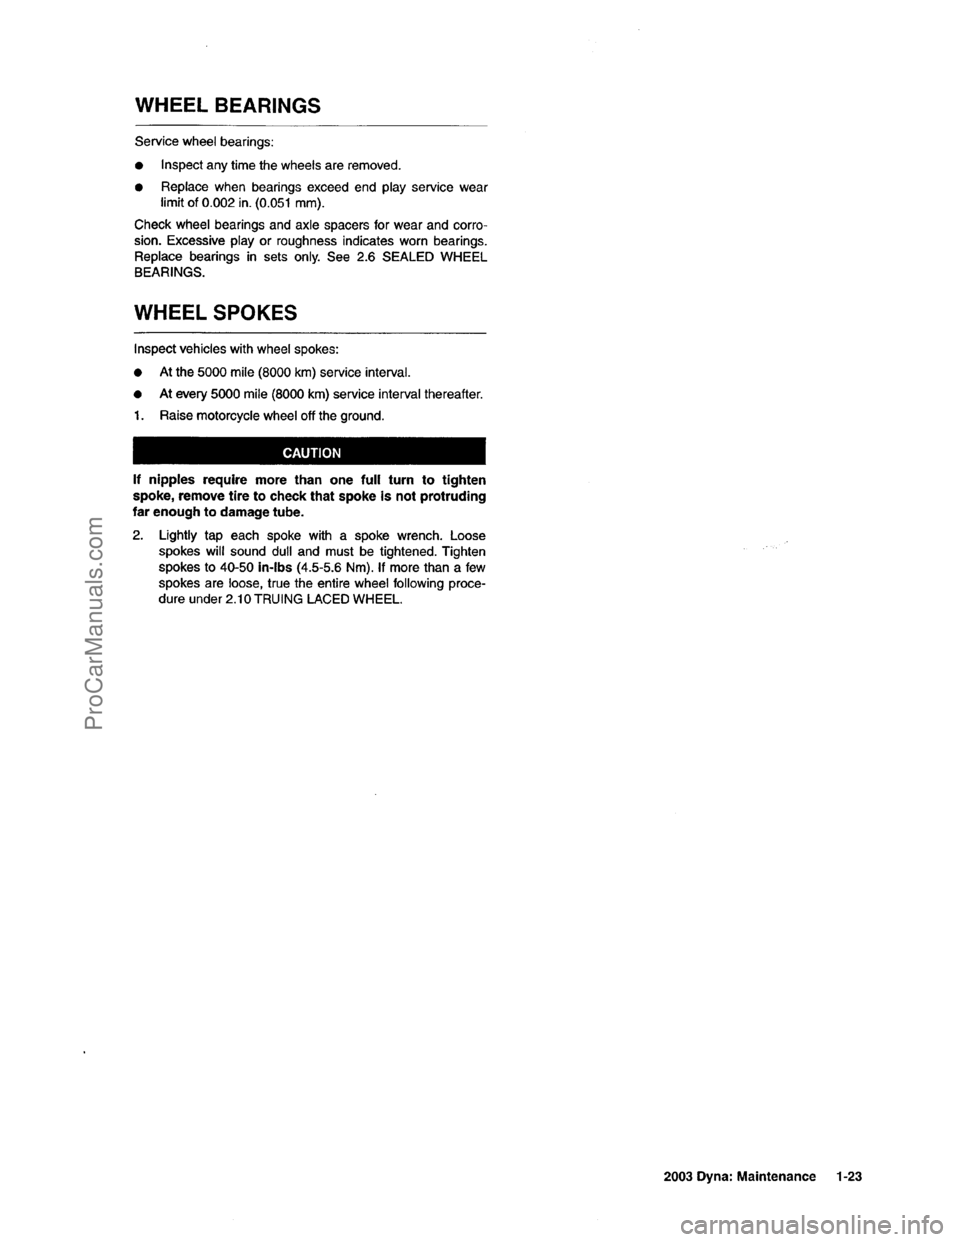 HARLEY-DAVIDSON DYNA GLIDE 2003 Owners Guide  [25]
ProCarManuals.com 